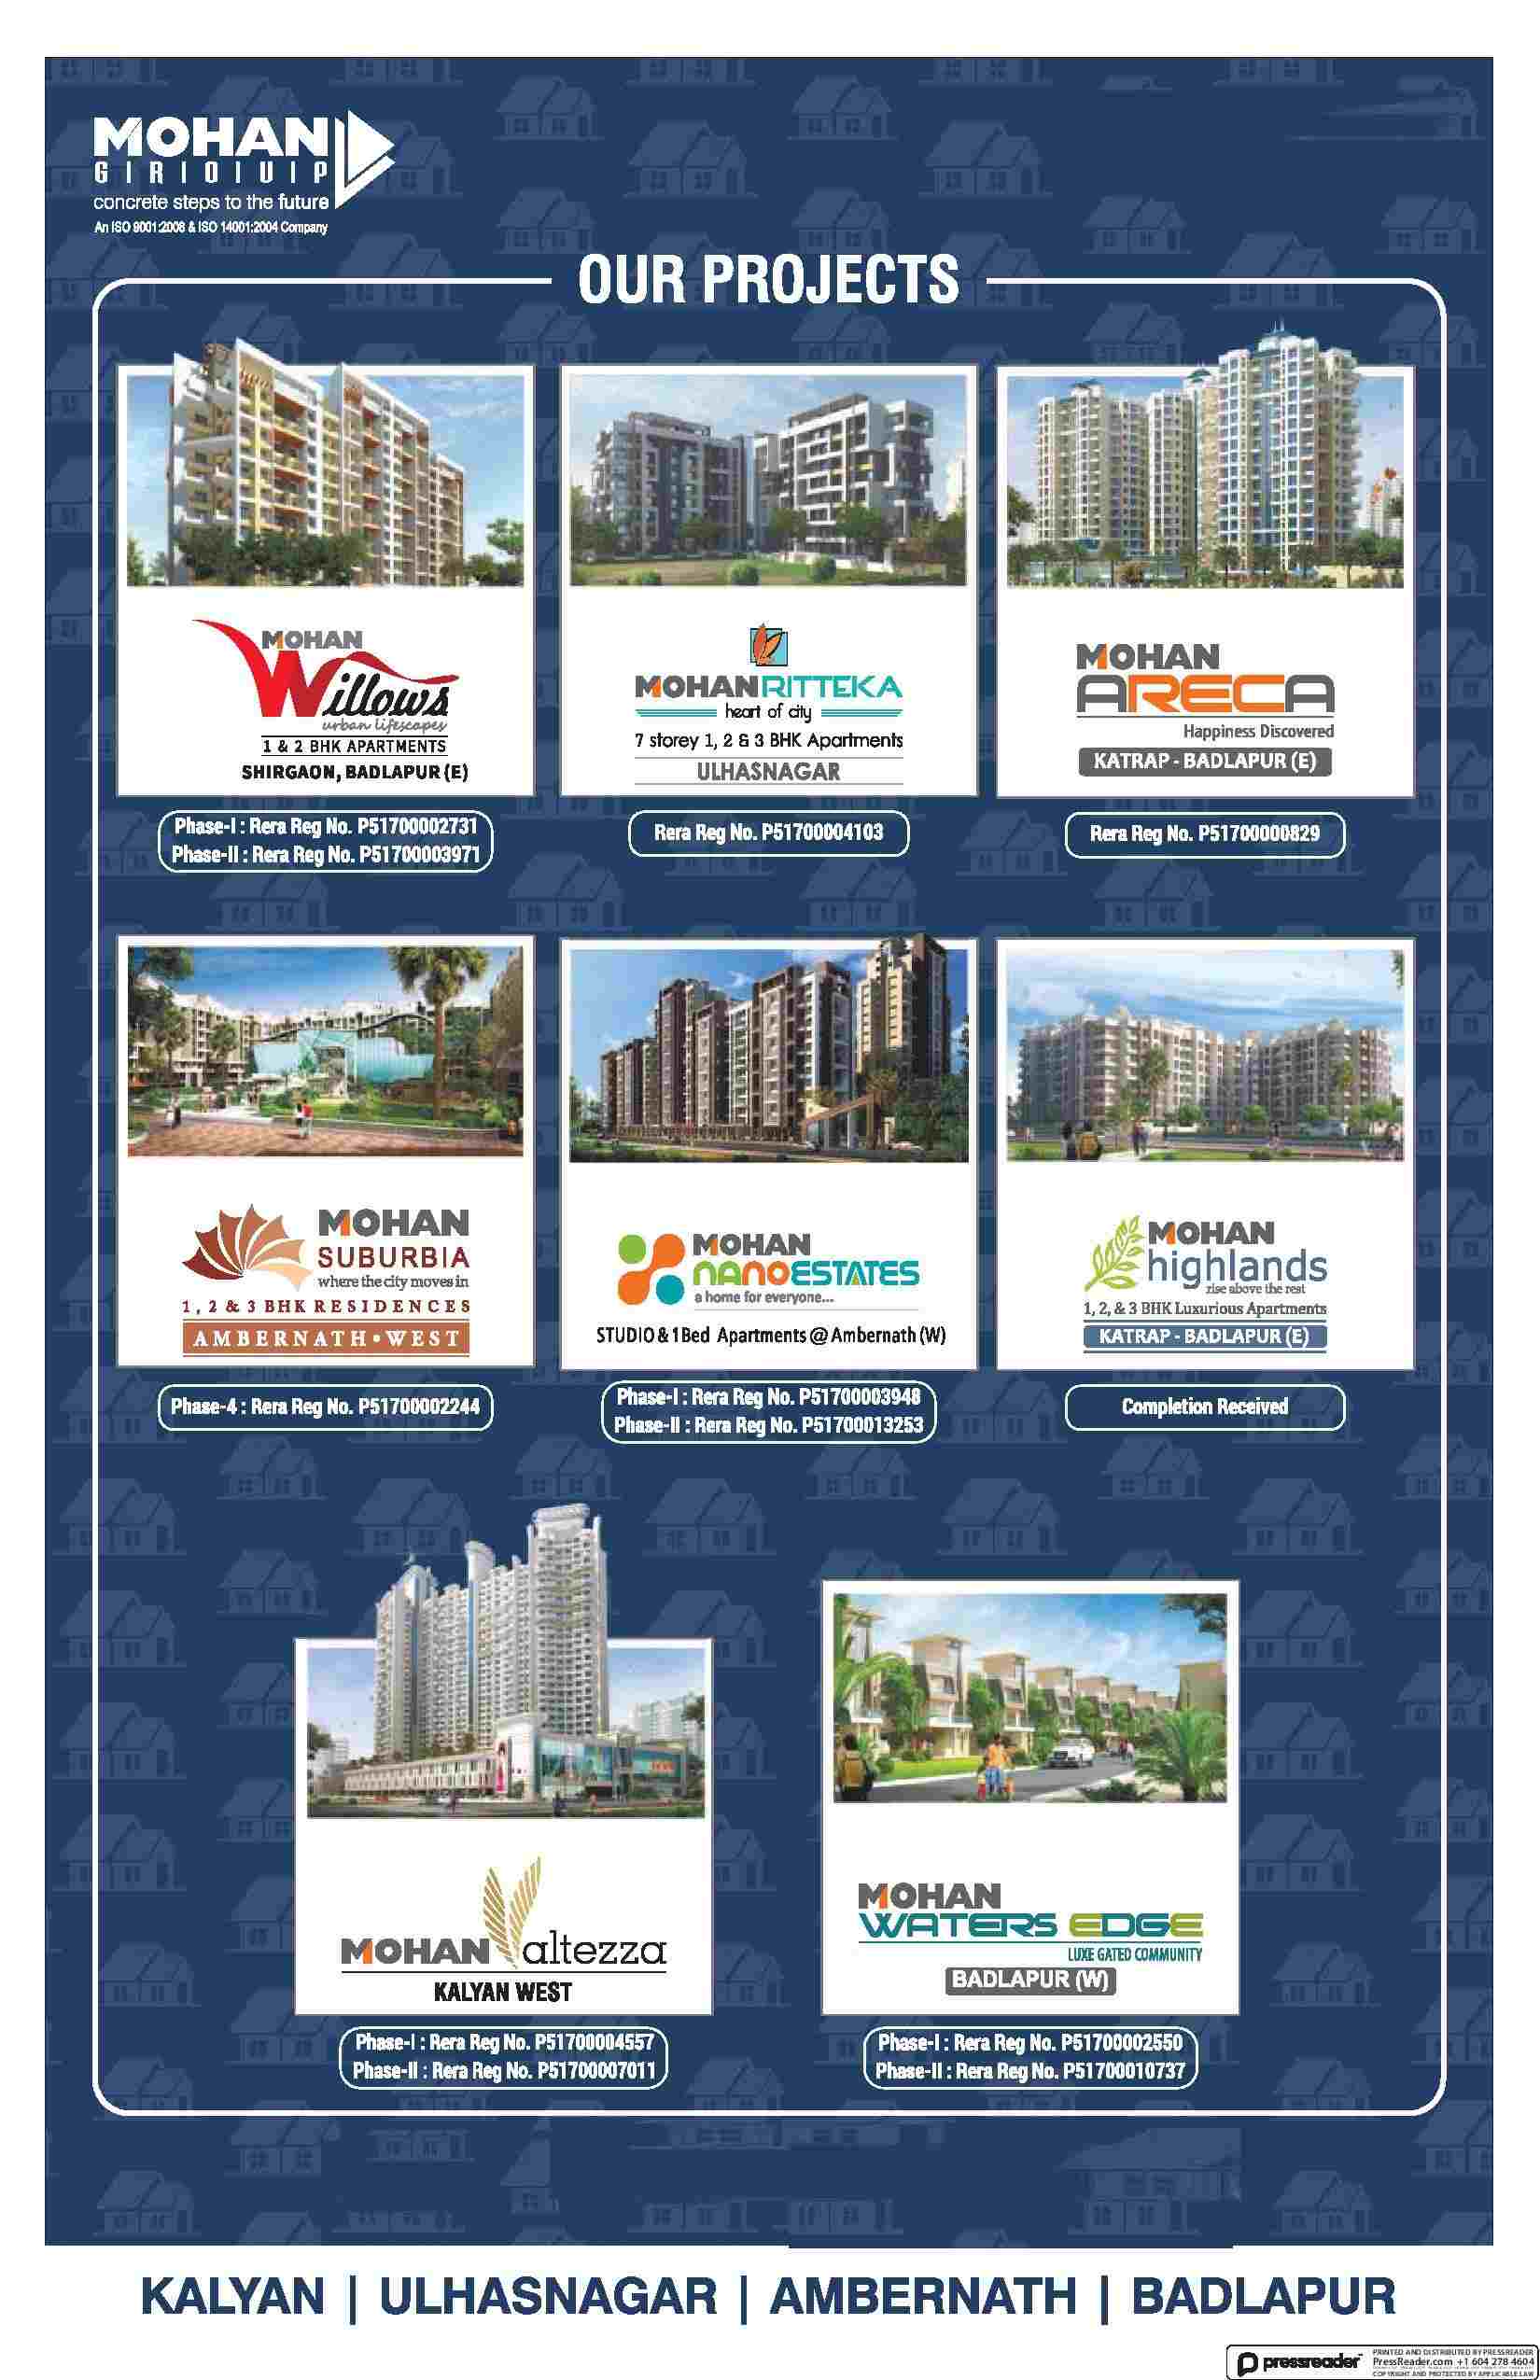 Invest in Mohan properties in Mumbai